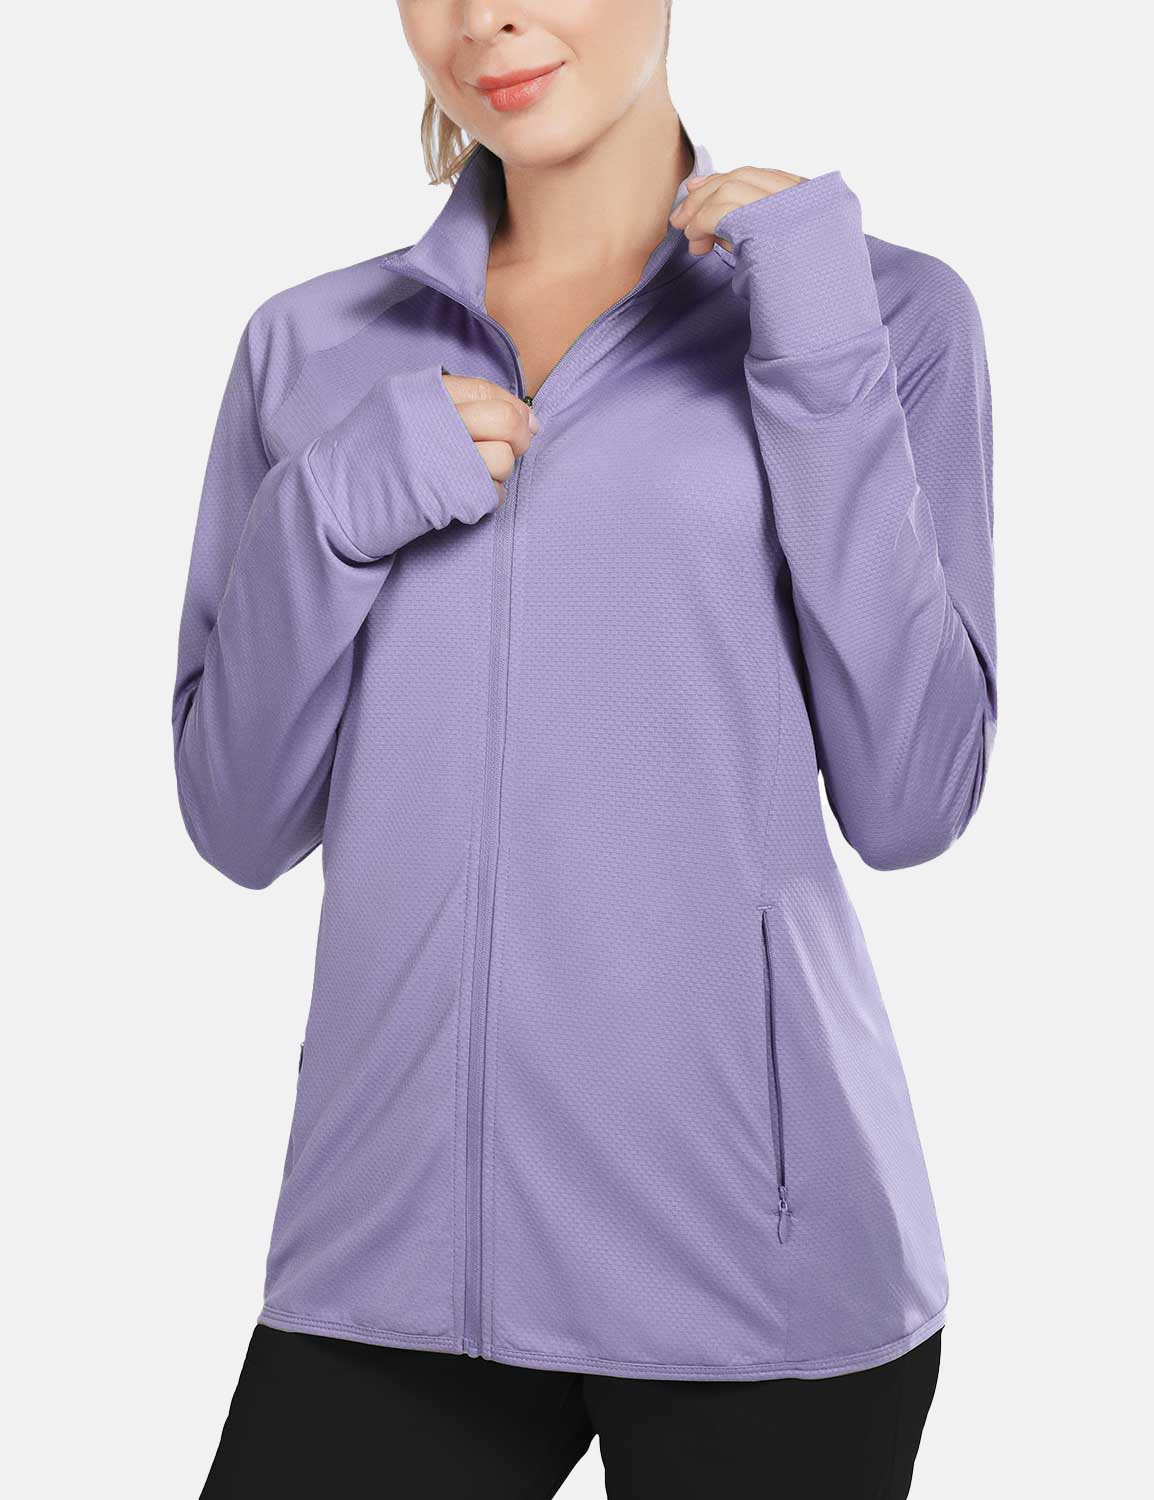 BALEAF Women's UPF 50+ Long Sleeve Zip Pocketed Lightweight Jackets cga018 Lavender Front